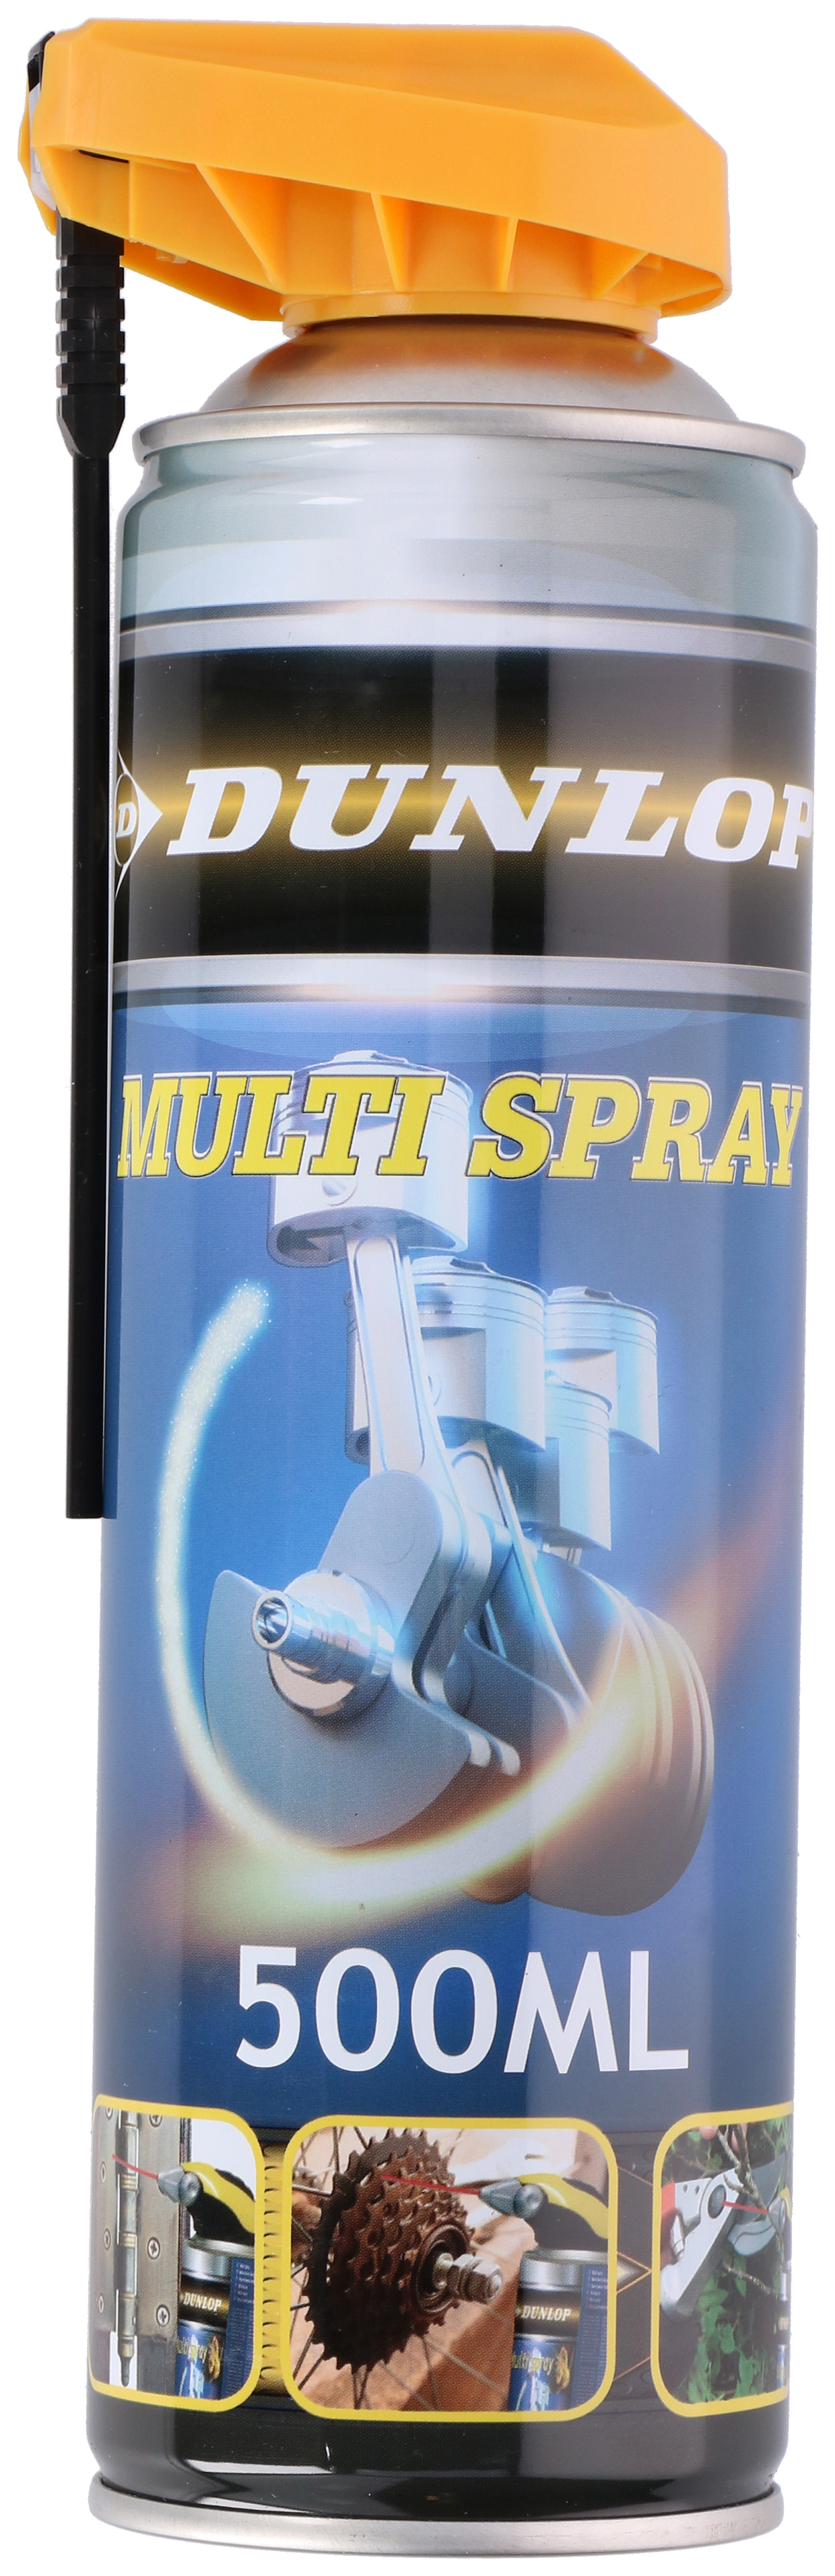 Multispray Dunlop 500ml